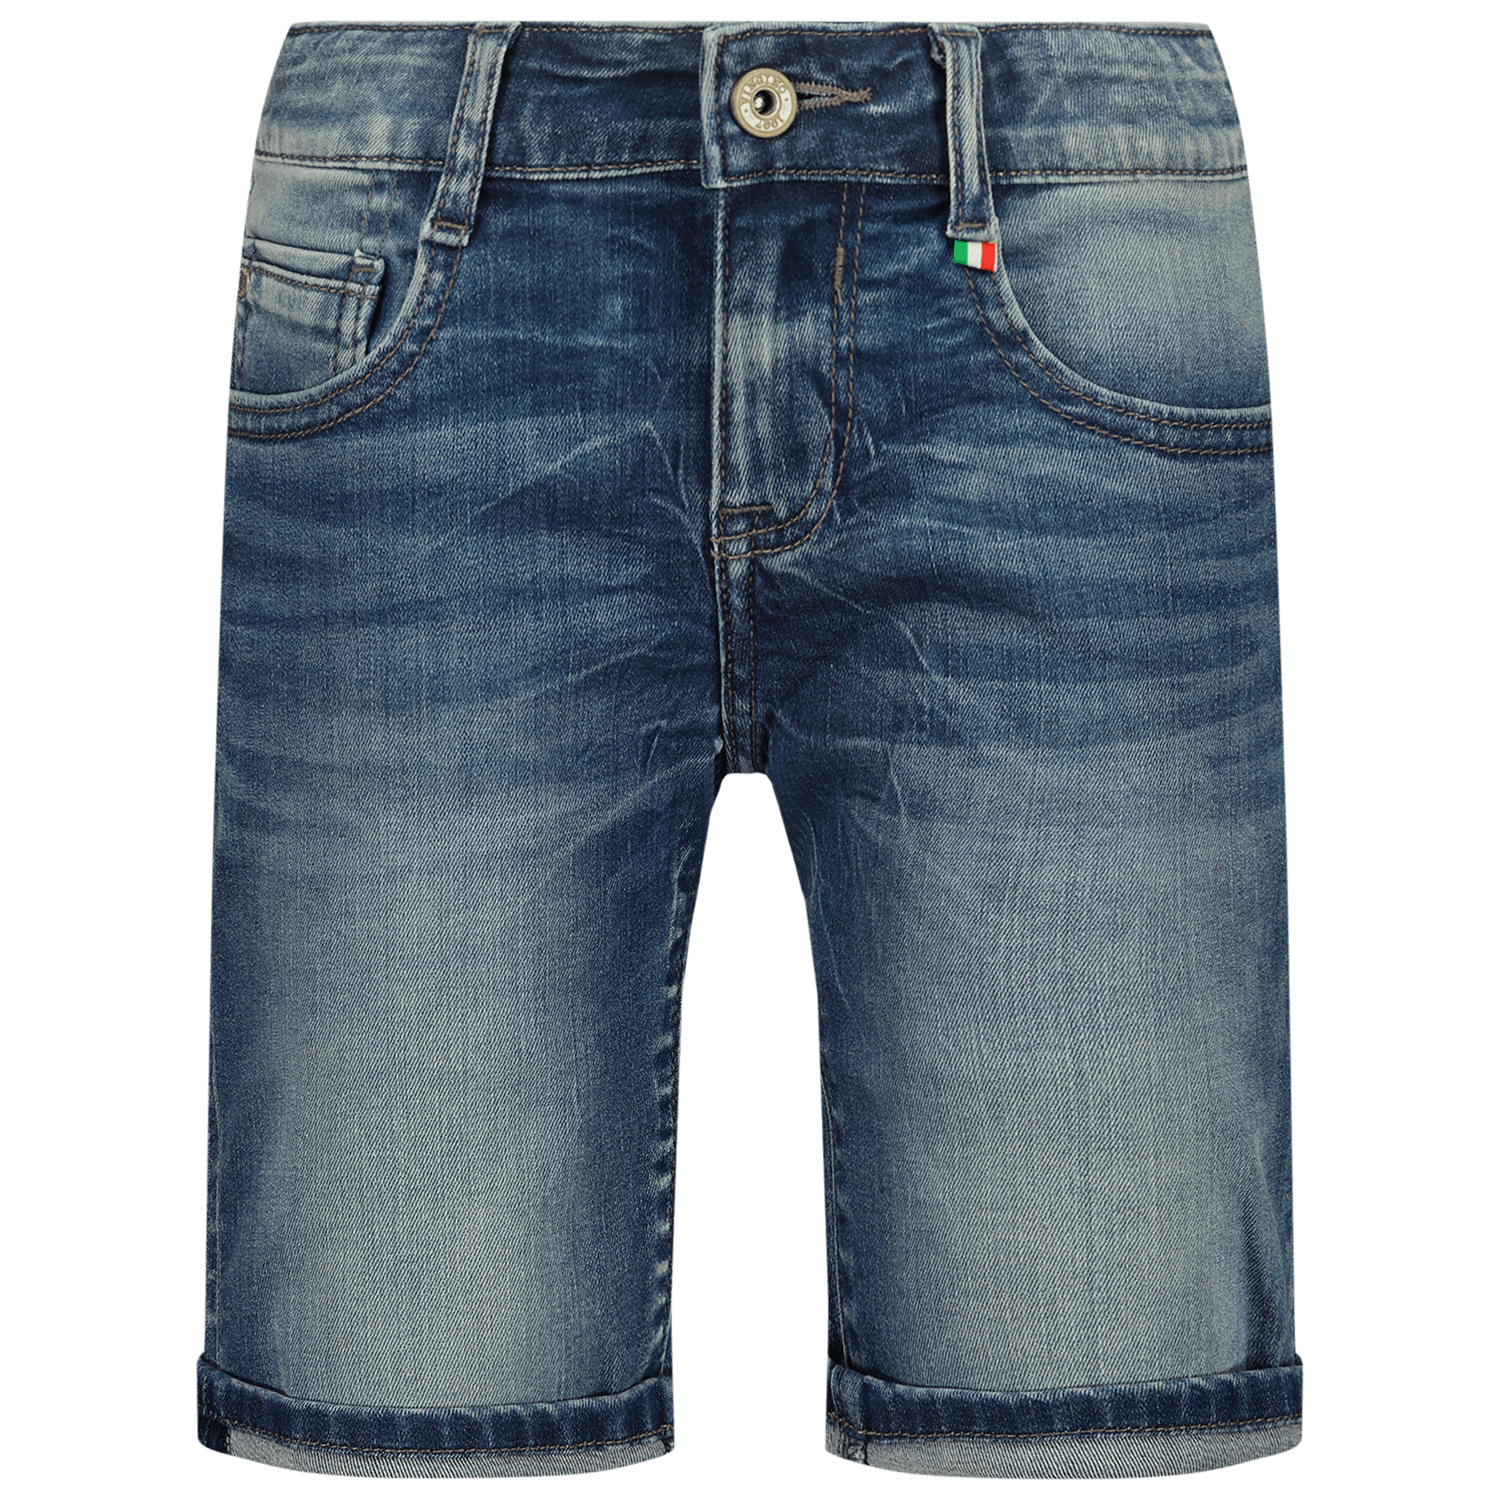 VINGINO Jeans Charlie